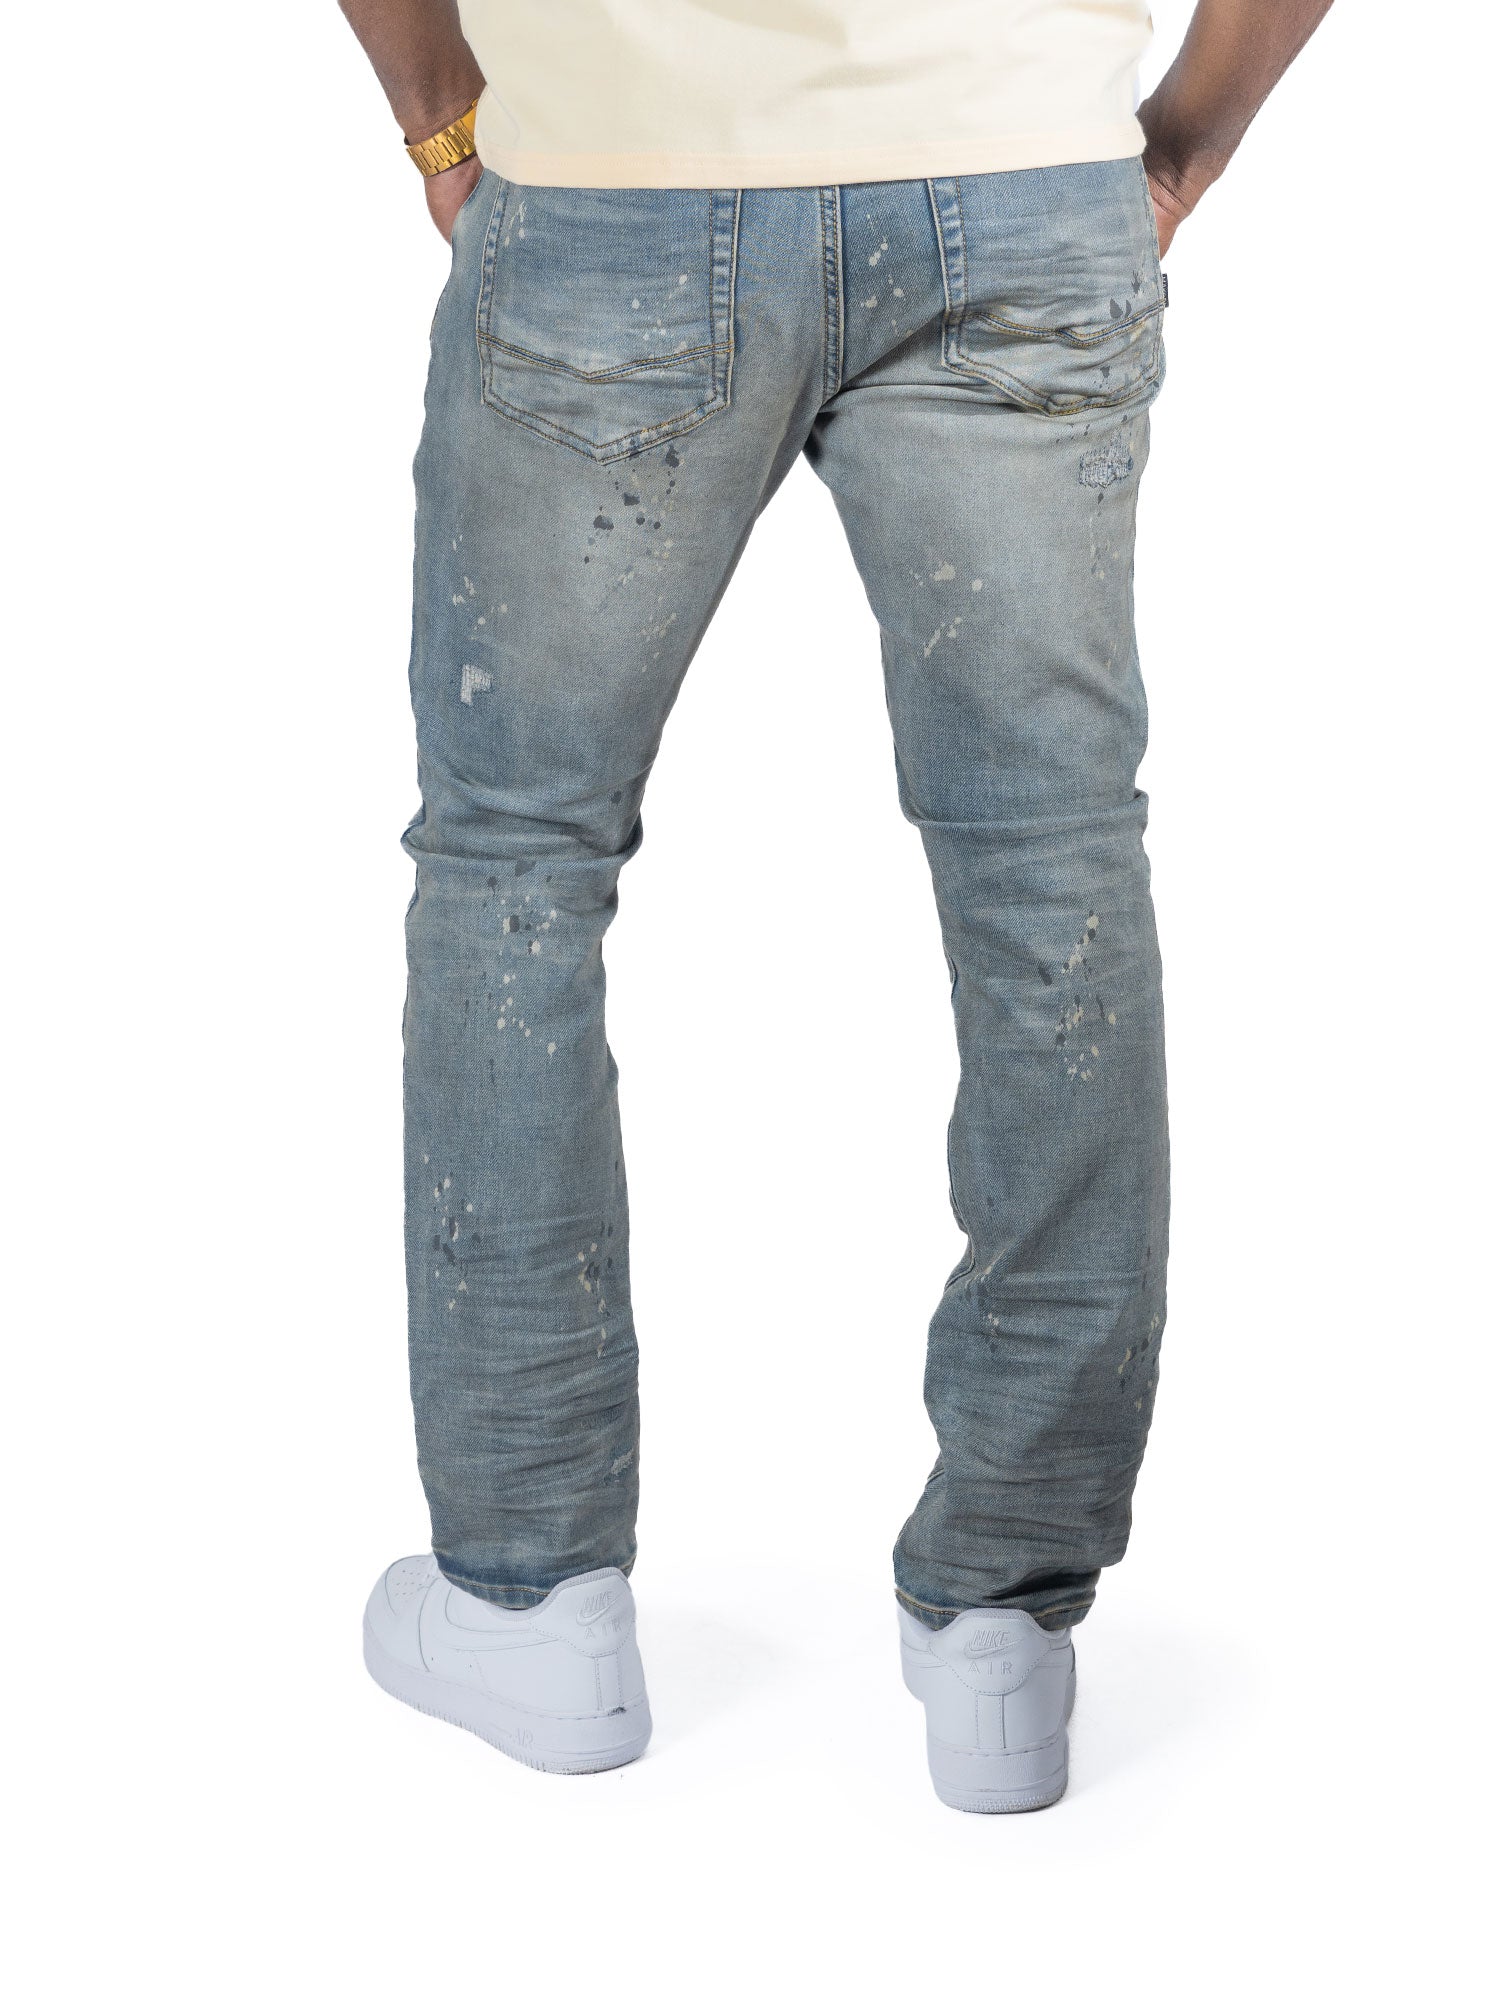 M1988 Pescara Jeans - Vintage